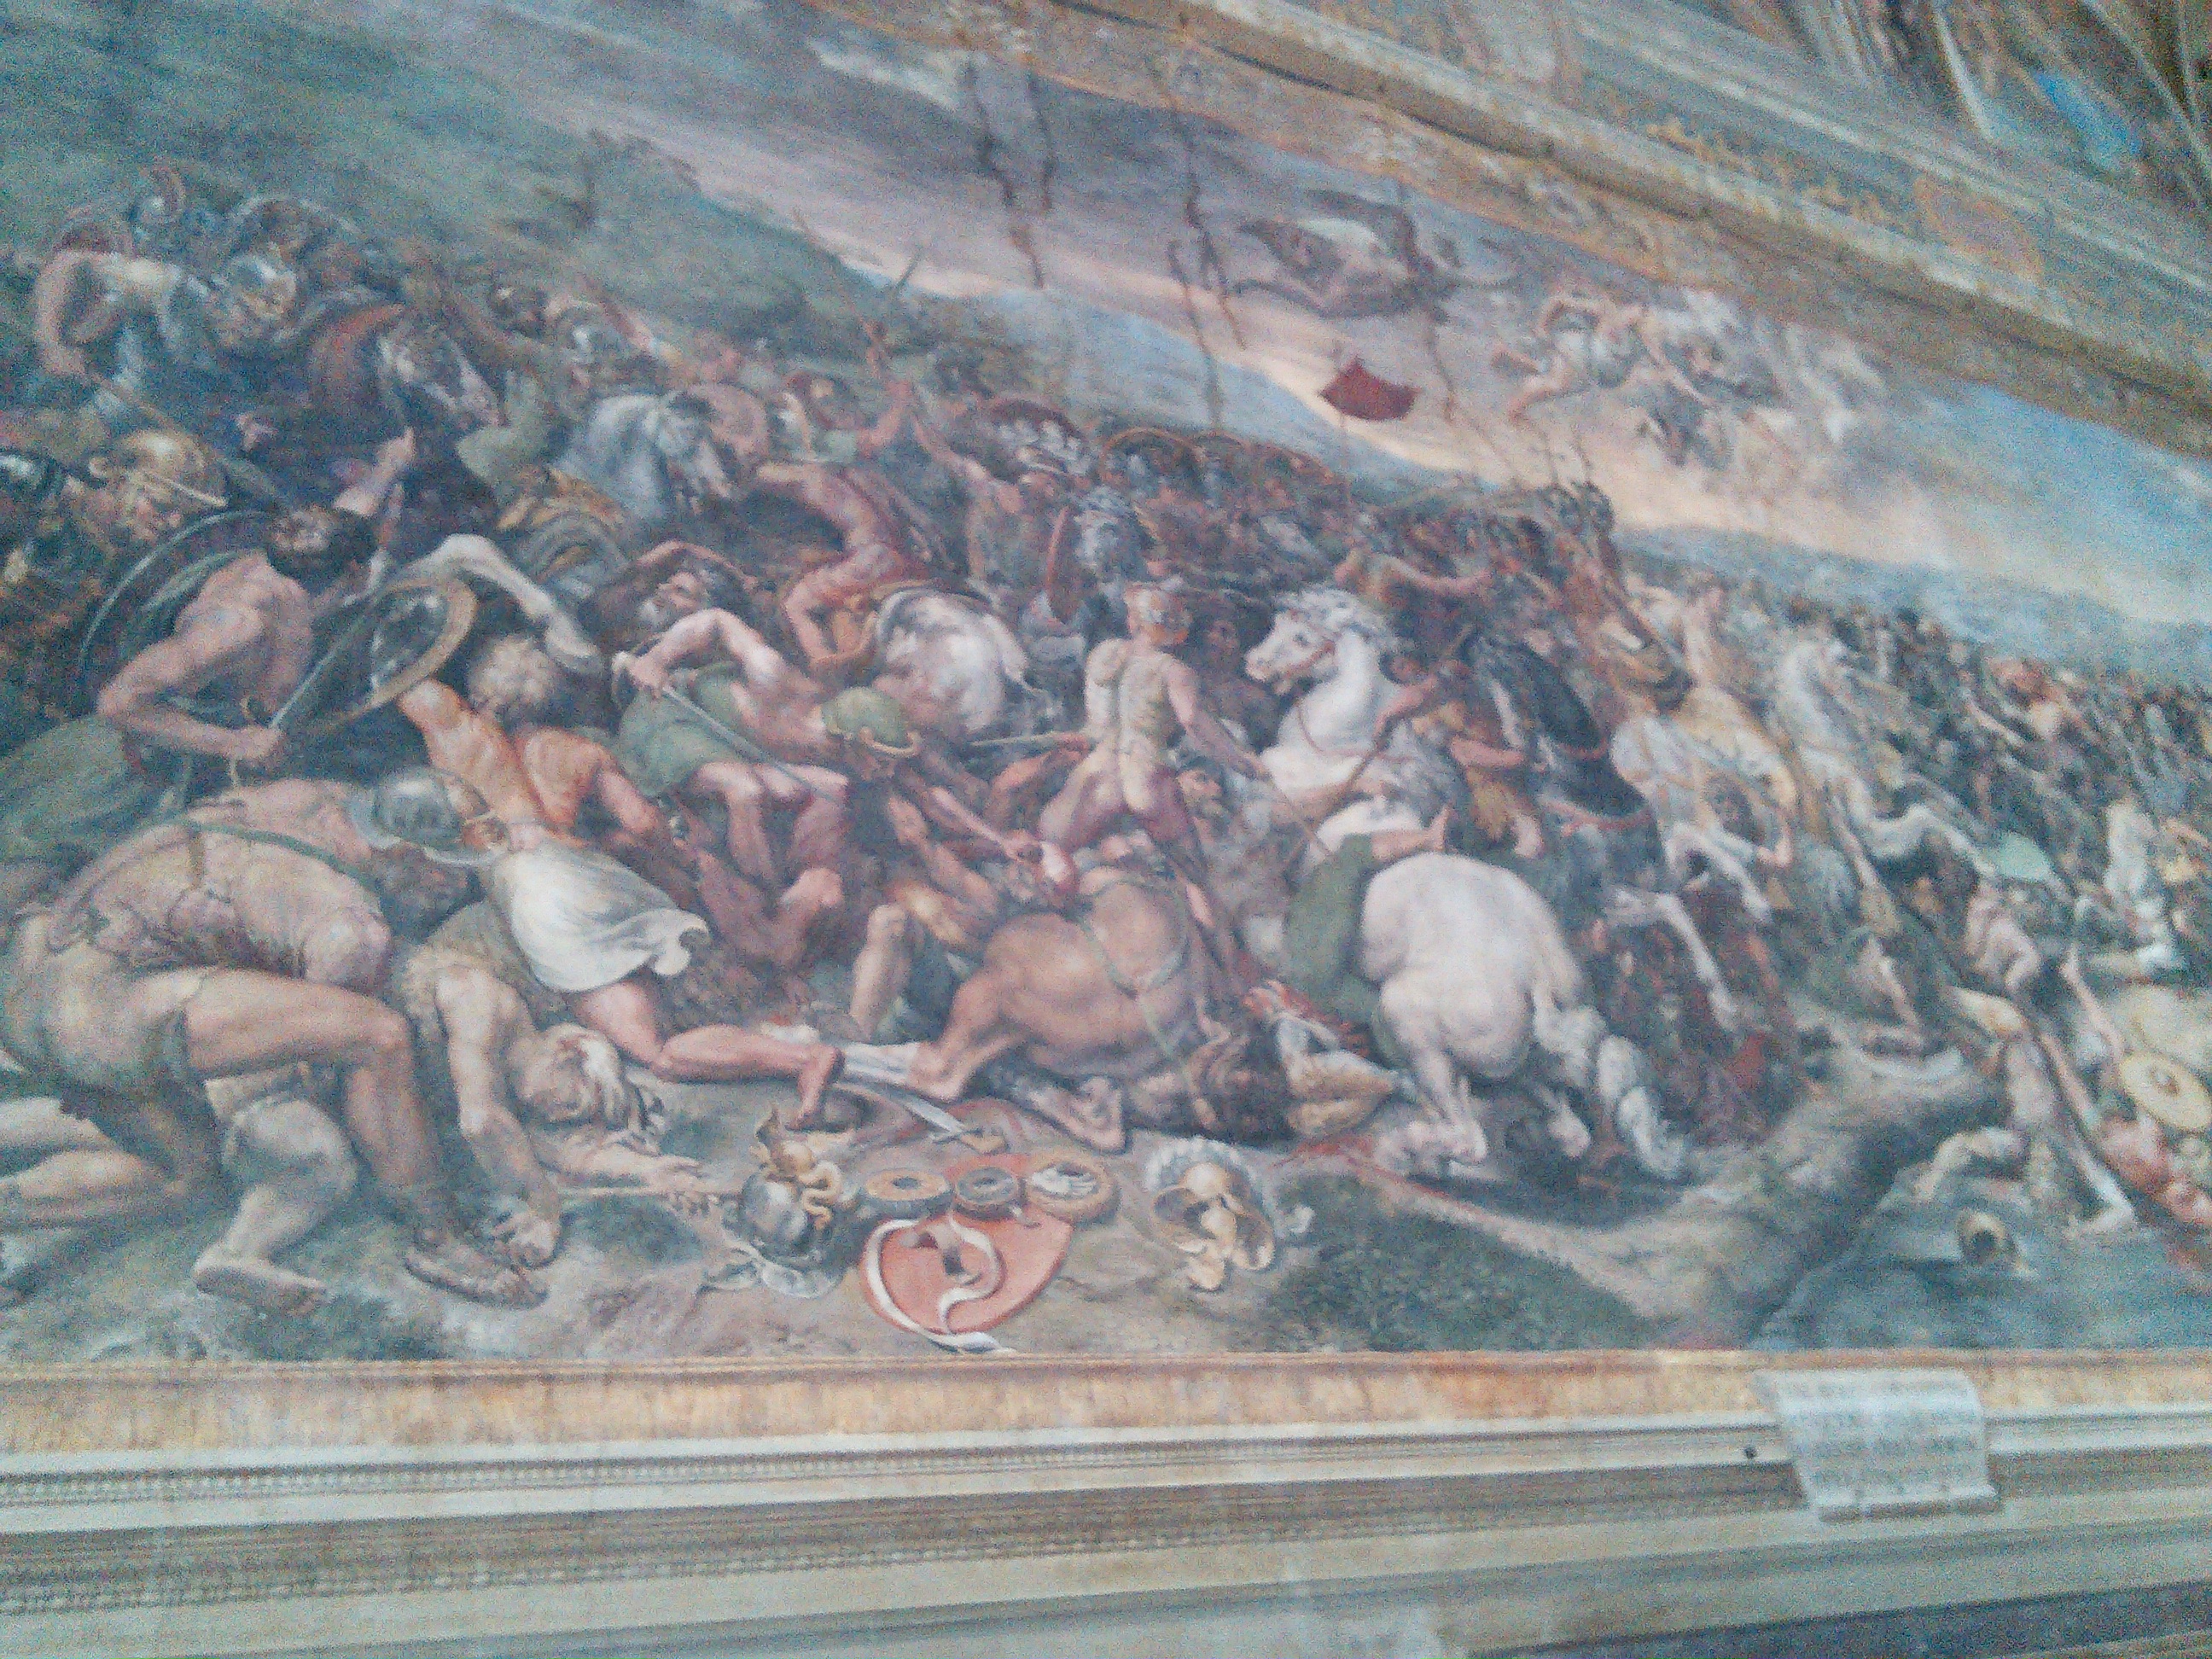 Vatican Raphael rooms (11)